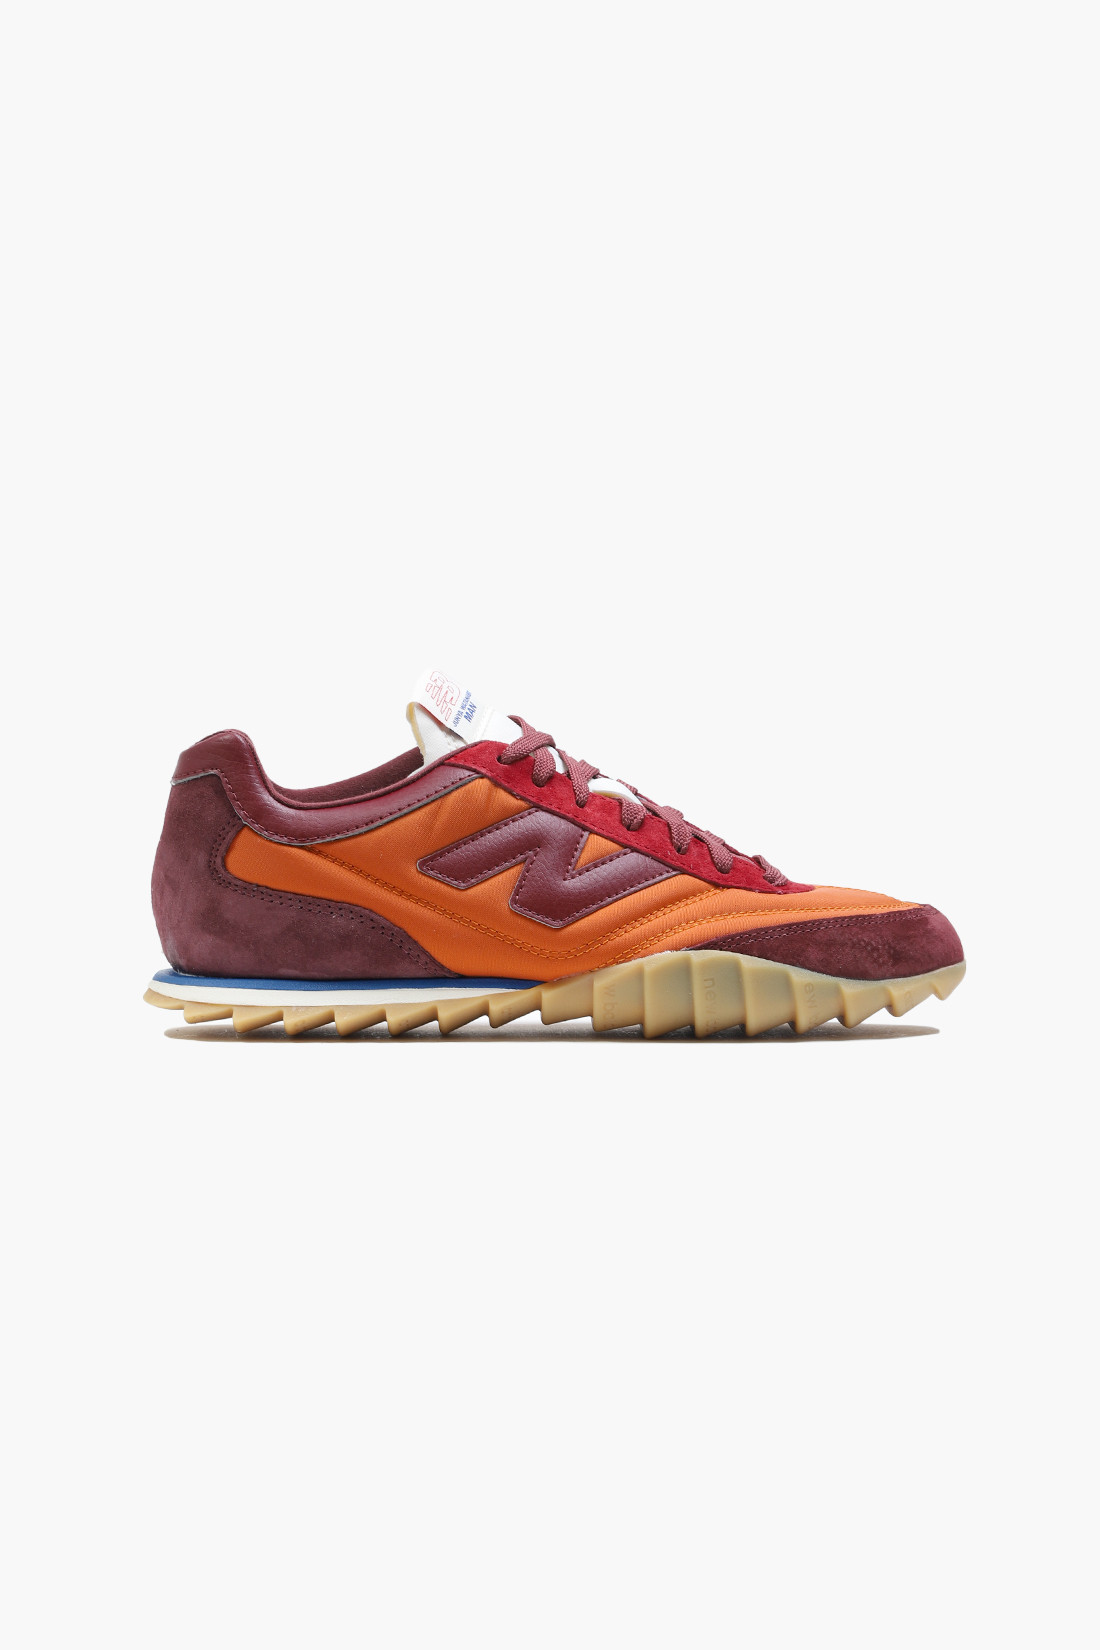 Mens shoes x new balance Orange / burgundy